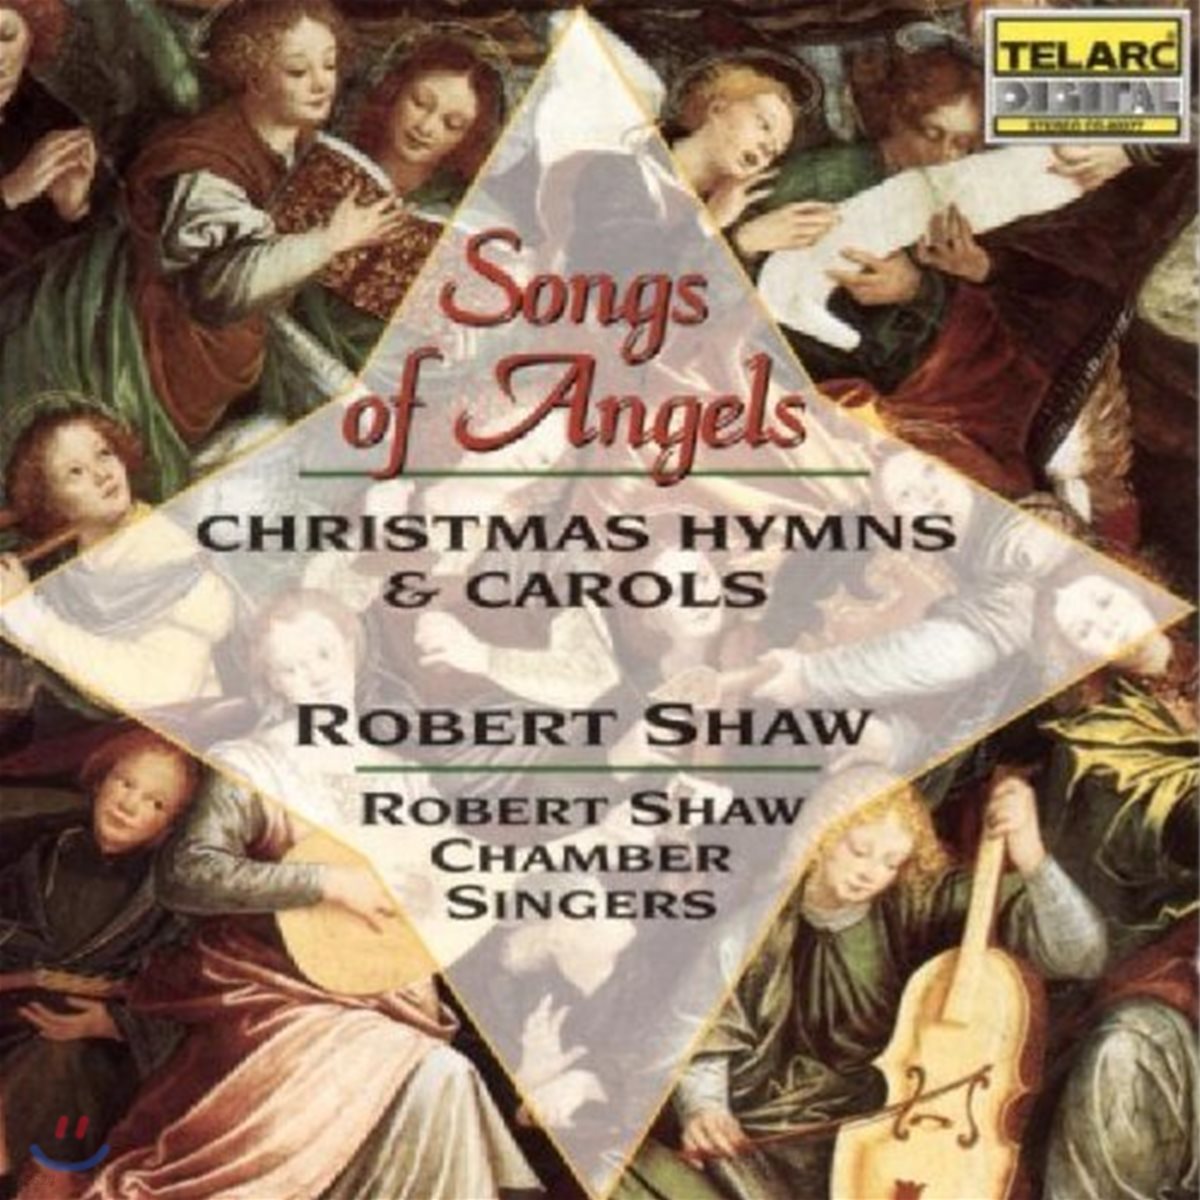 Robert Shaw Chamber Singers 로버트 쇼우 합창 - 천사의 노래, 크리스마스 찬송, 캐롤 (Songs of Angels - Christmas Hymns & Carols)